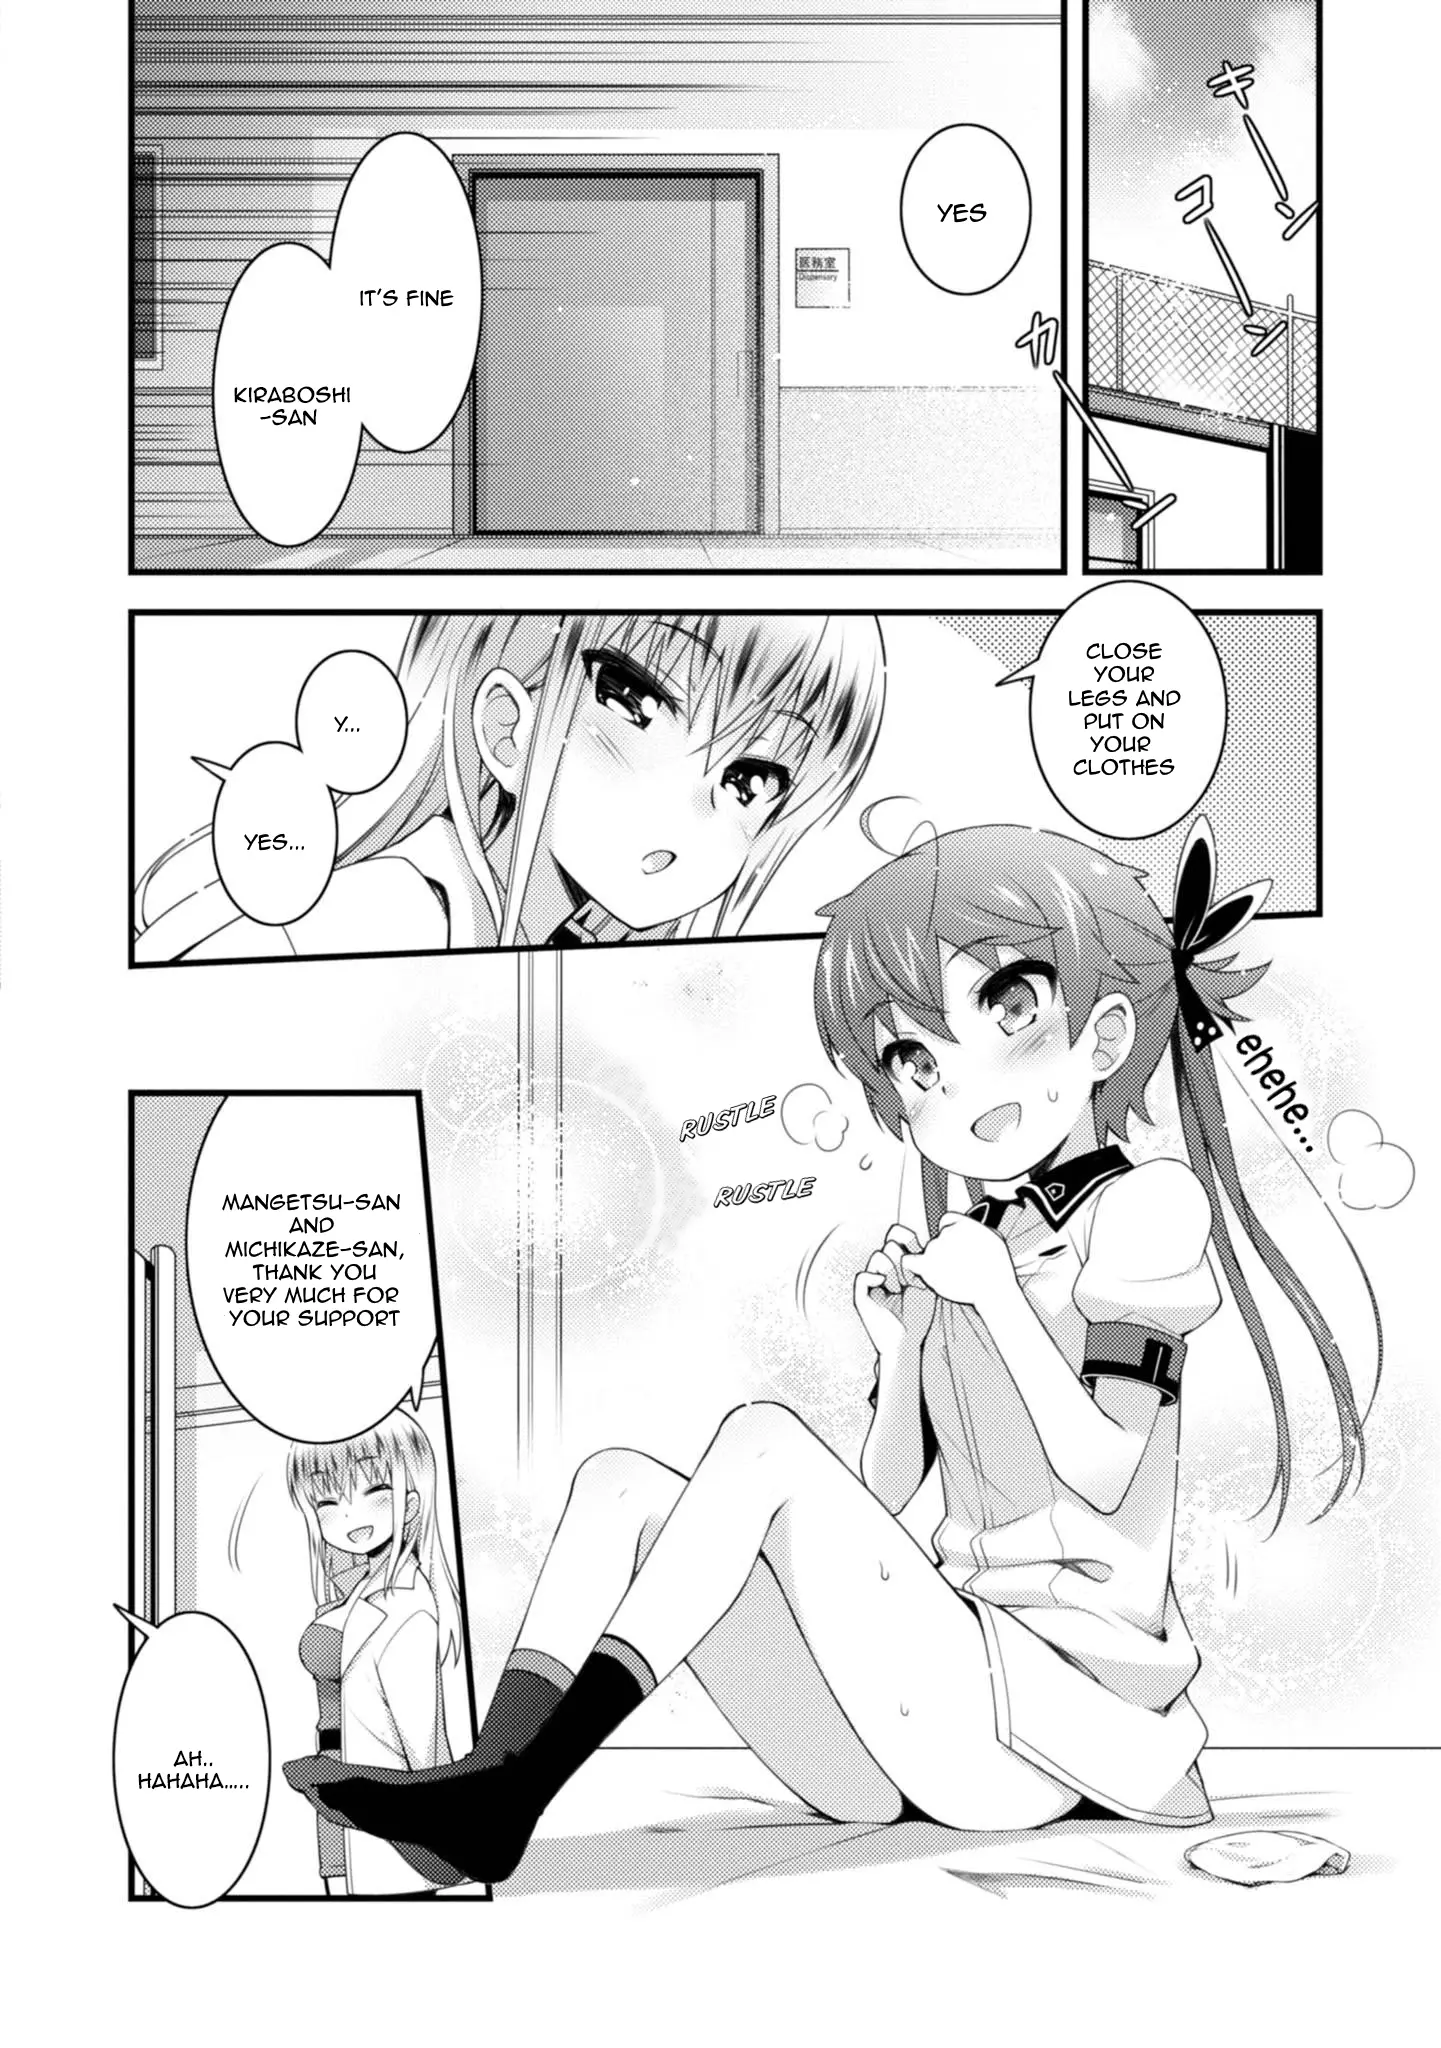 Sakura Nadeshiko - 7 page 6-598af285